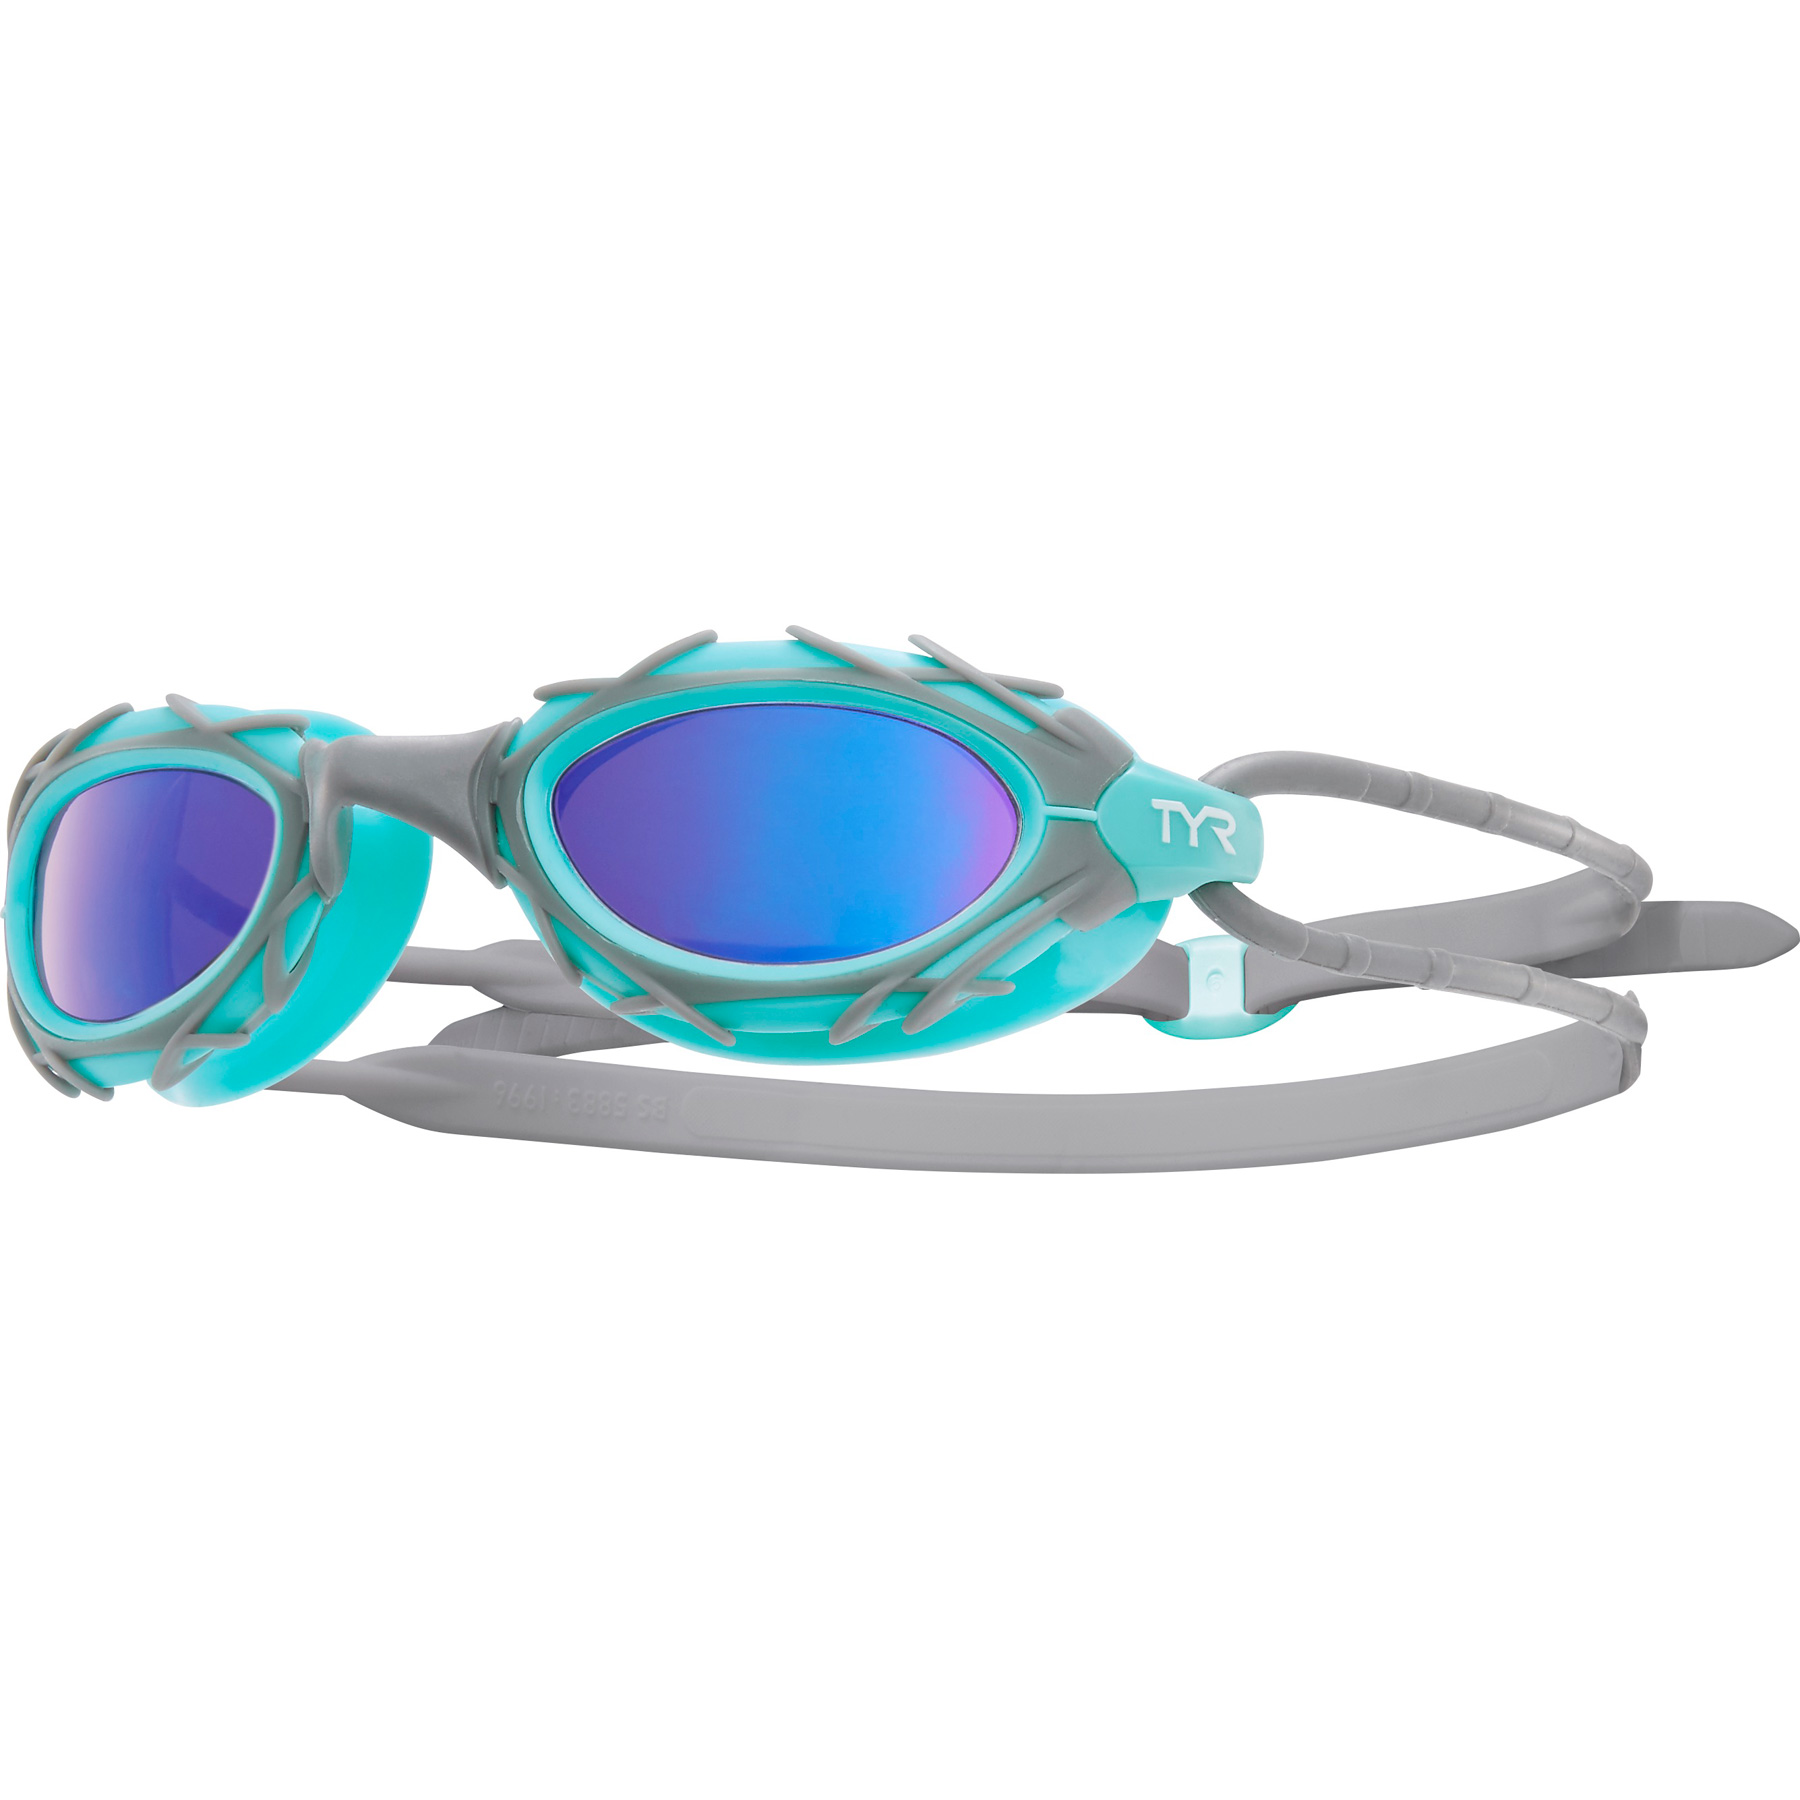 Immagine di TYR Nest Pro Mirrored Nano Fit Swimming Goggles - blue/grey/mint